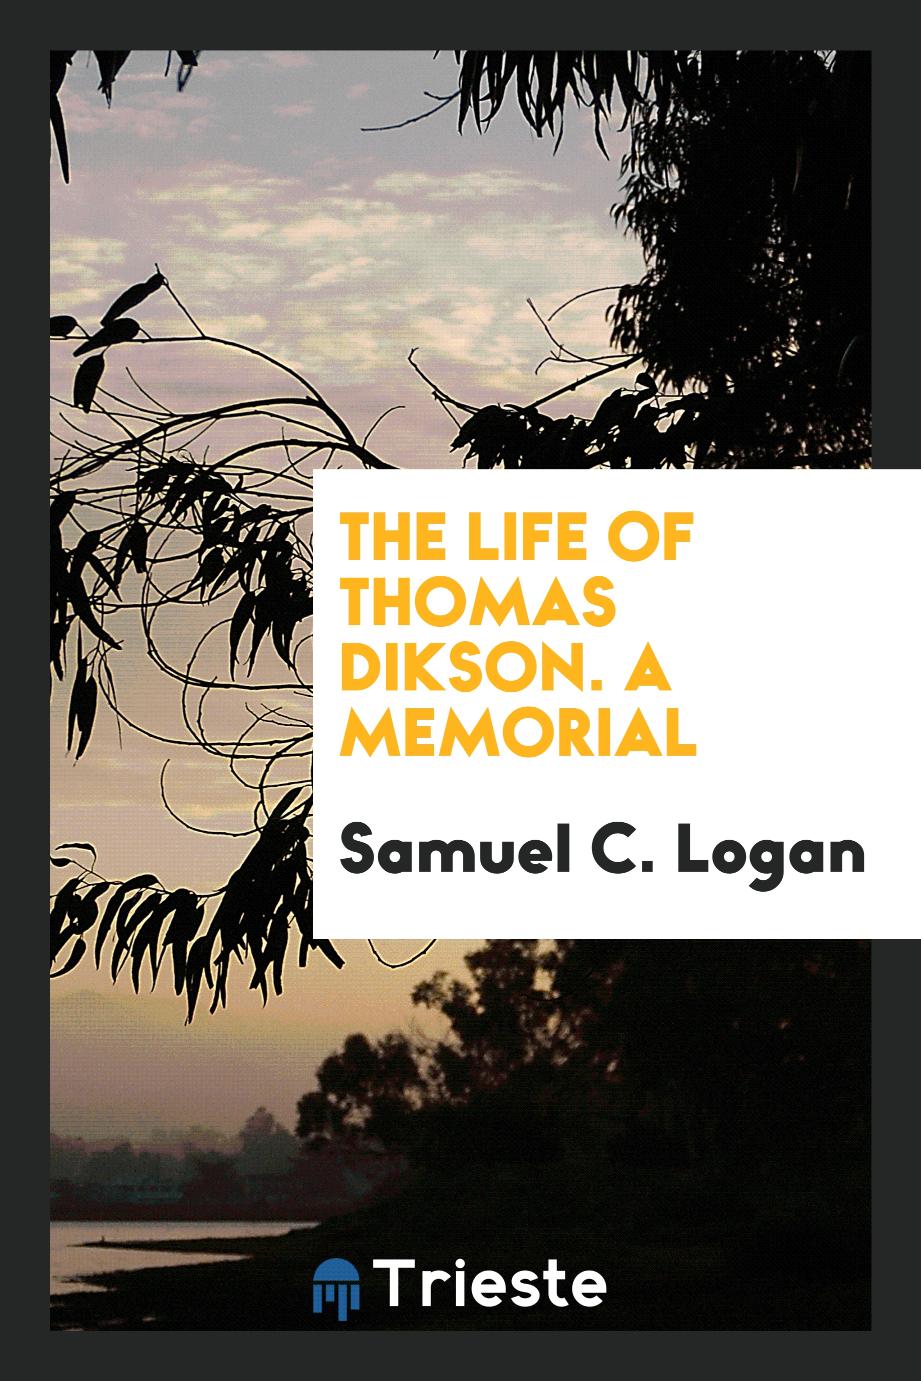 The Life of Thomas Dikson. A Memorial